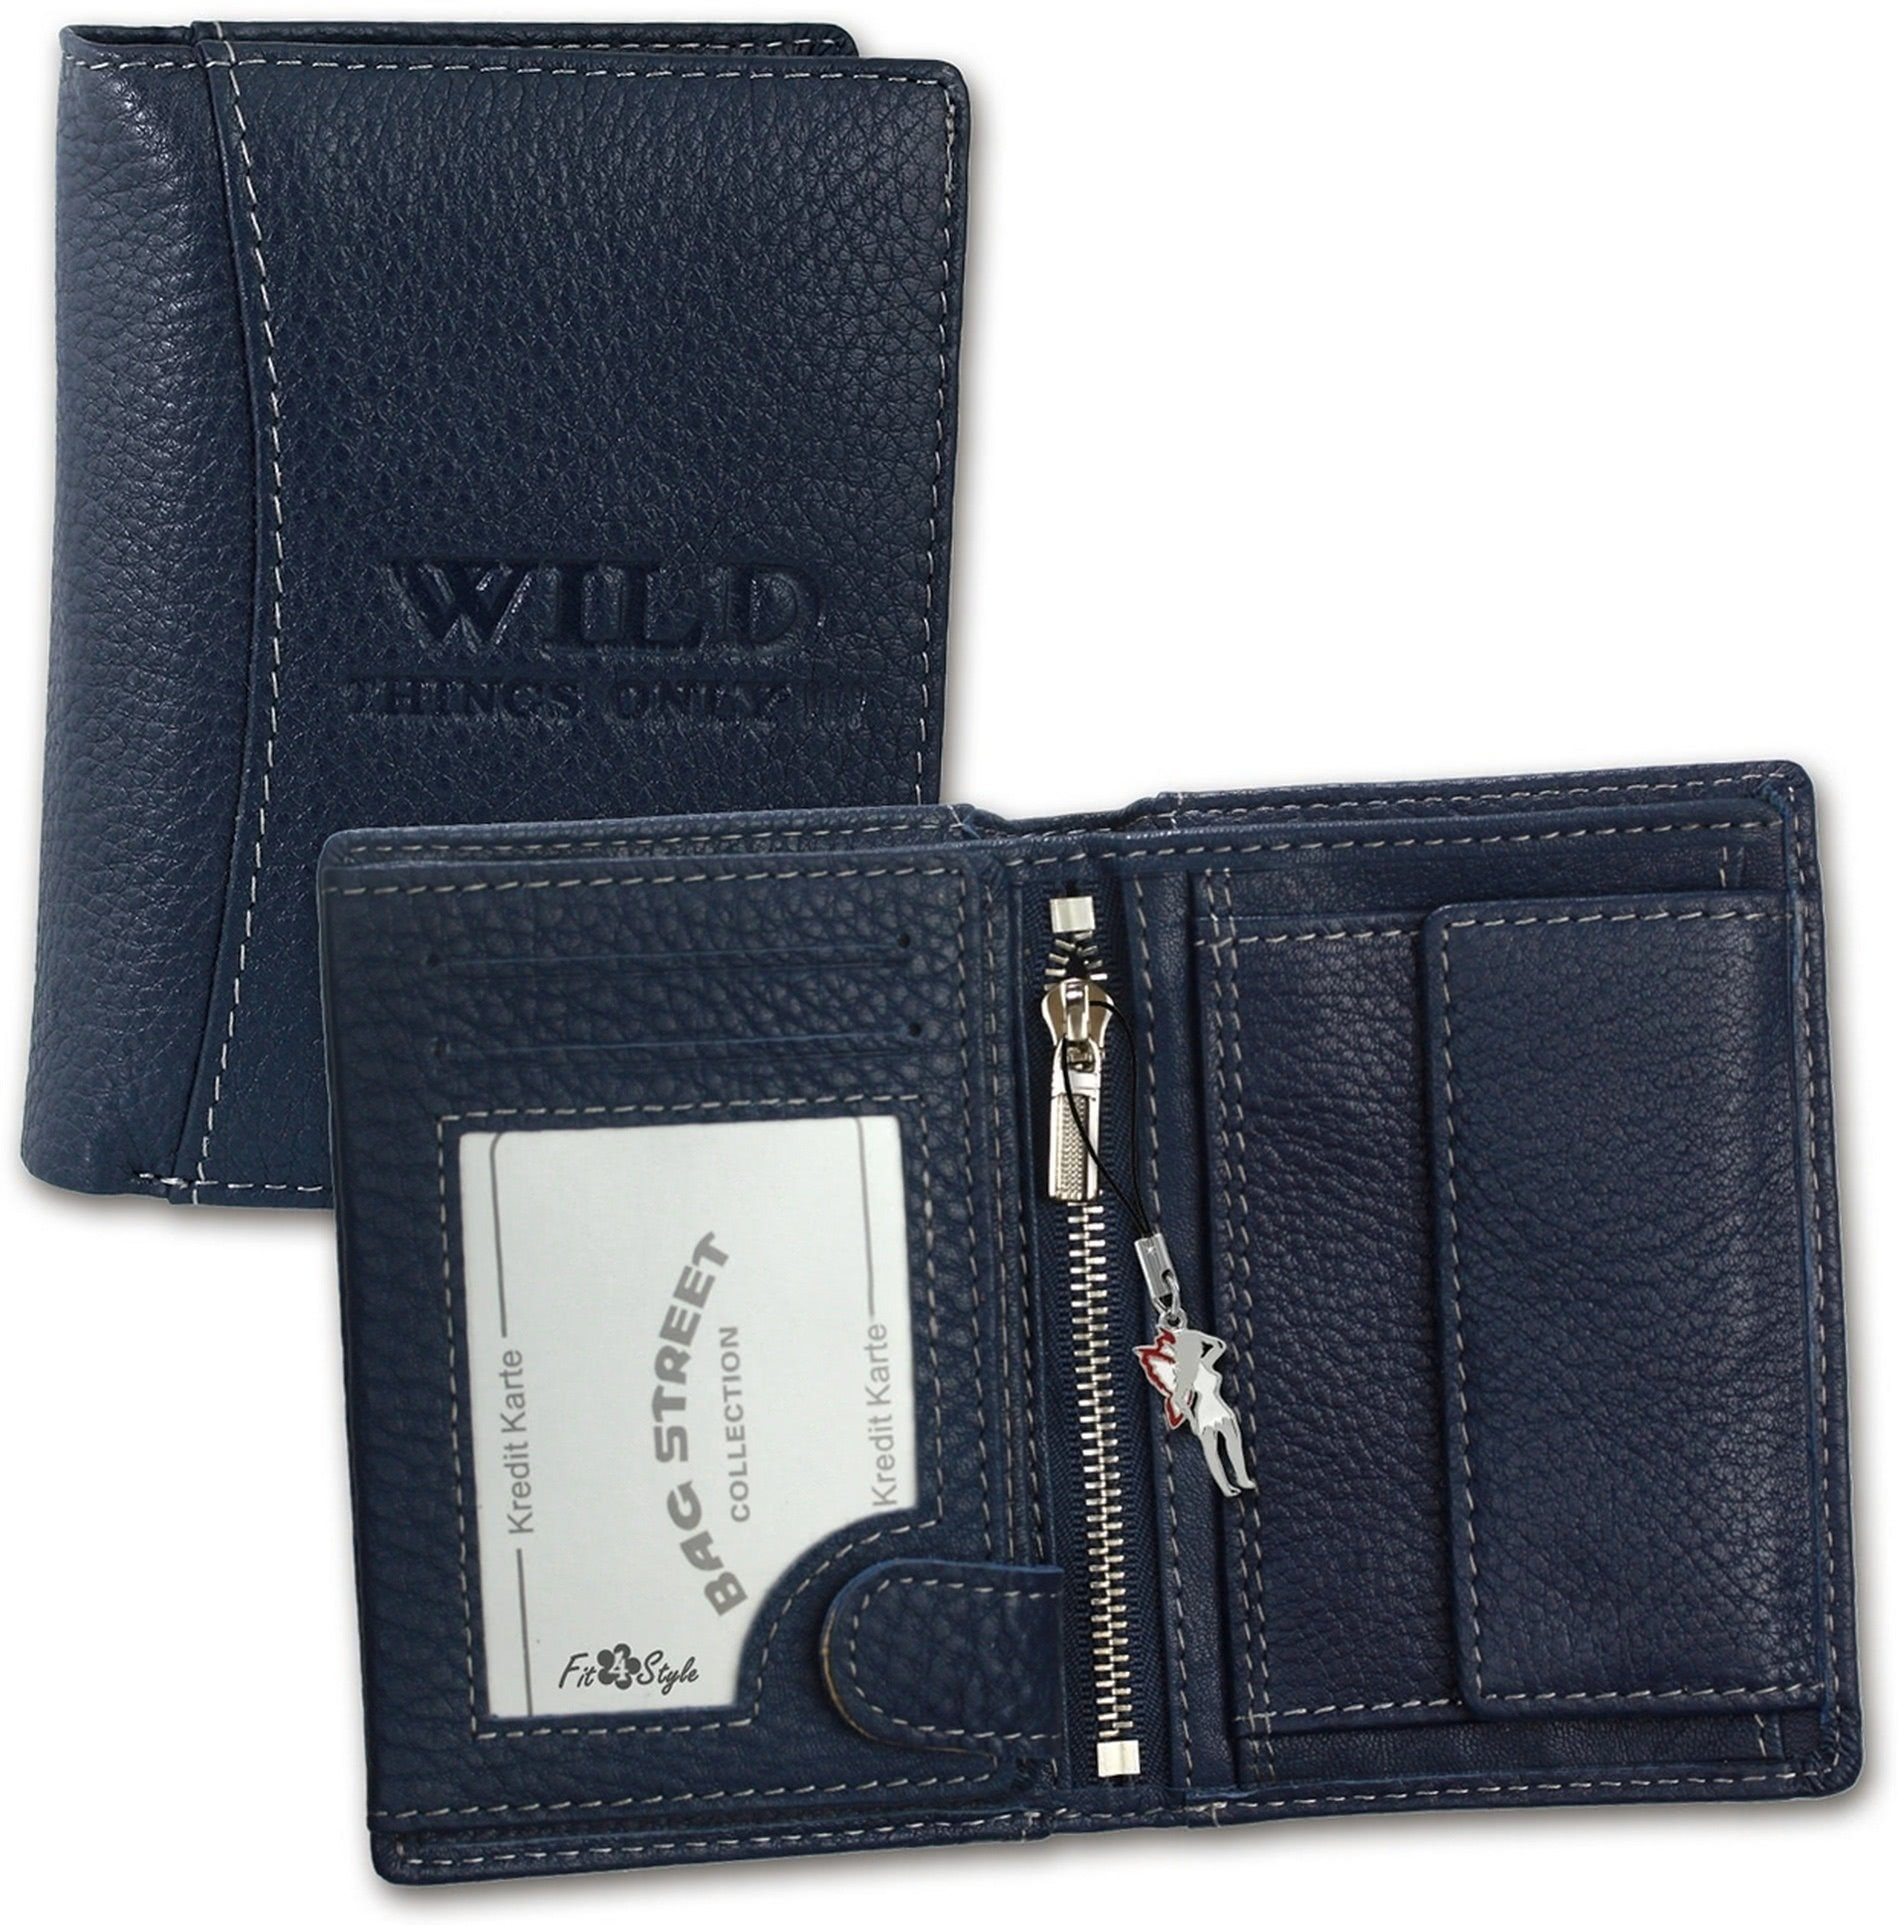 Wild Things Only !!! Geldbörse Wild Things Only RFID Block Antikleder (Portemonnaie, Portemonnaie), Portemonnaie aus Echtleder blau, Größe ca. 9cm